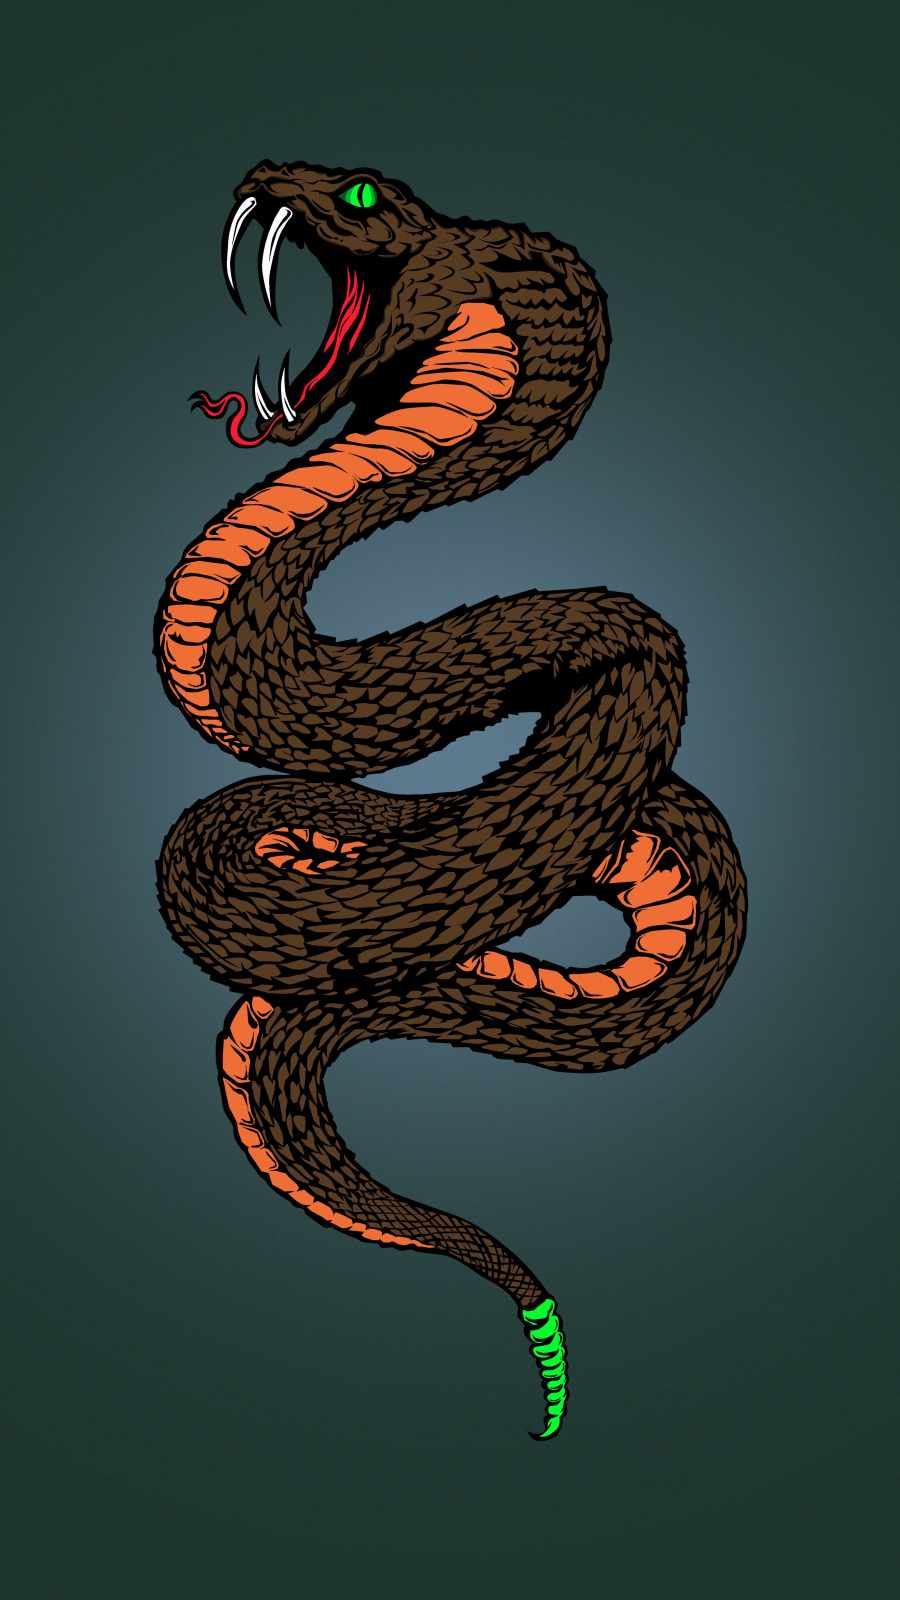 Cobra Snake iPhone Wallpaper